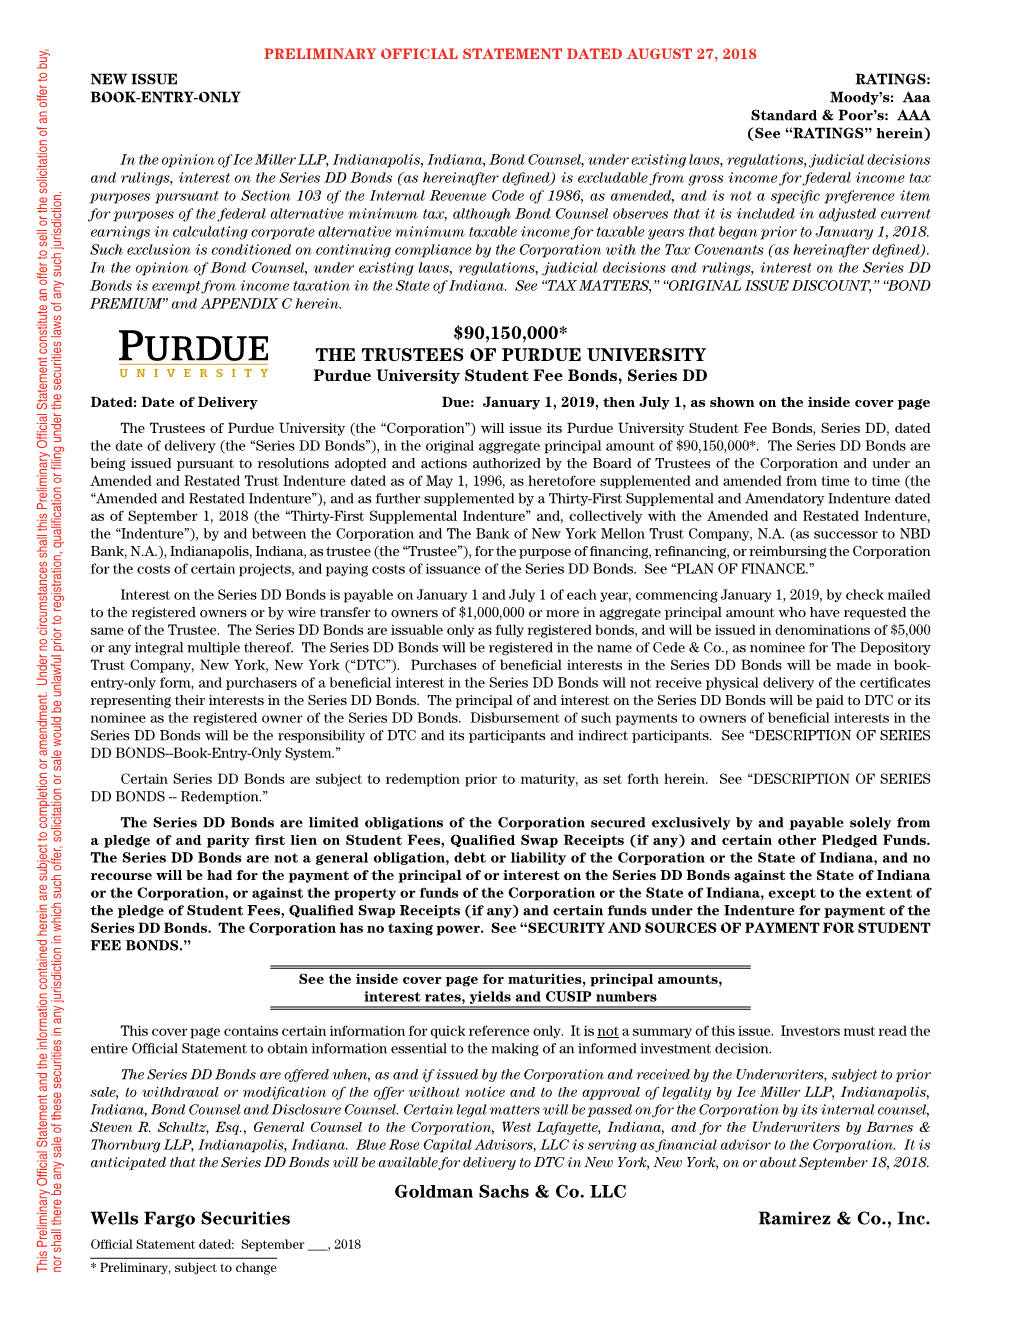 The Trustees of Purdue University